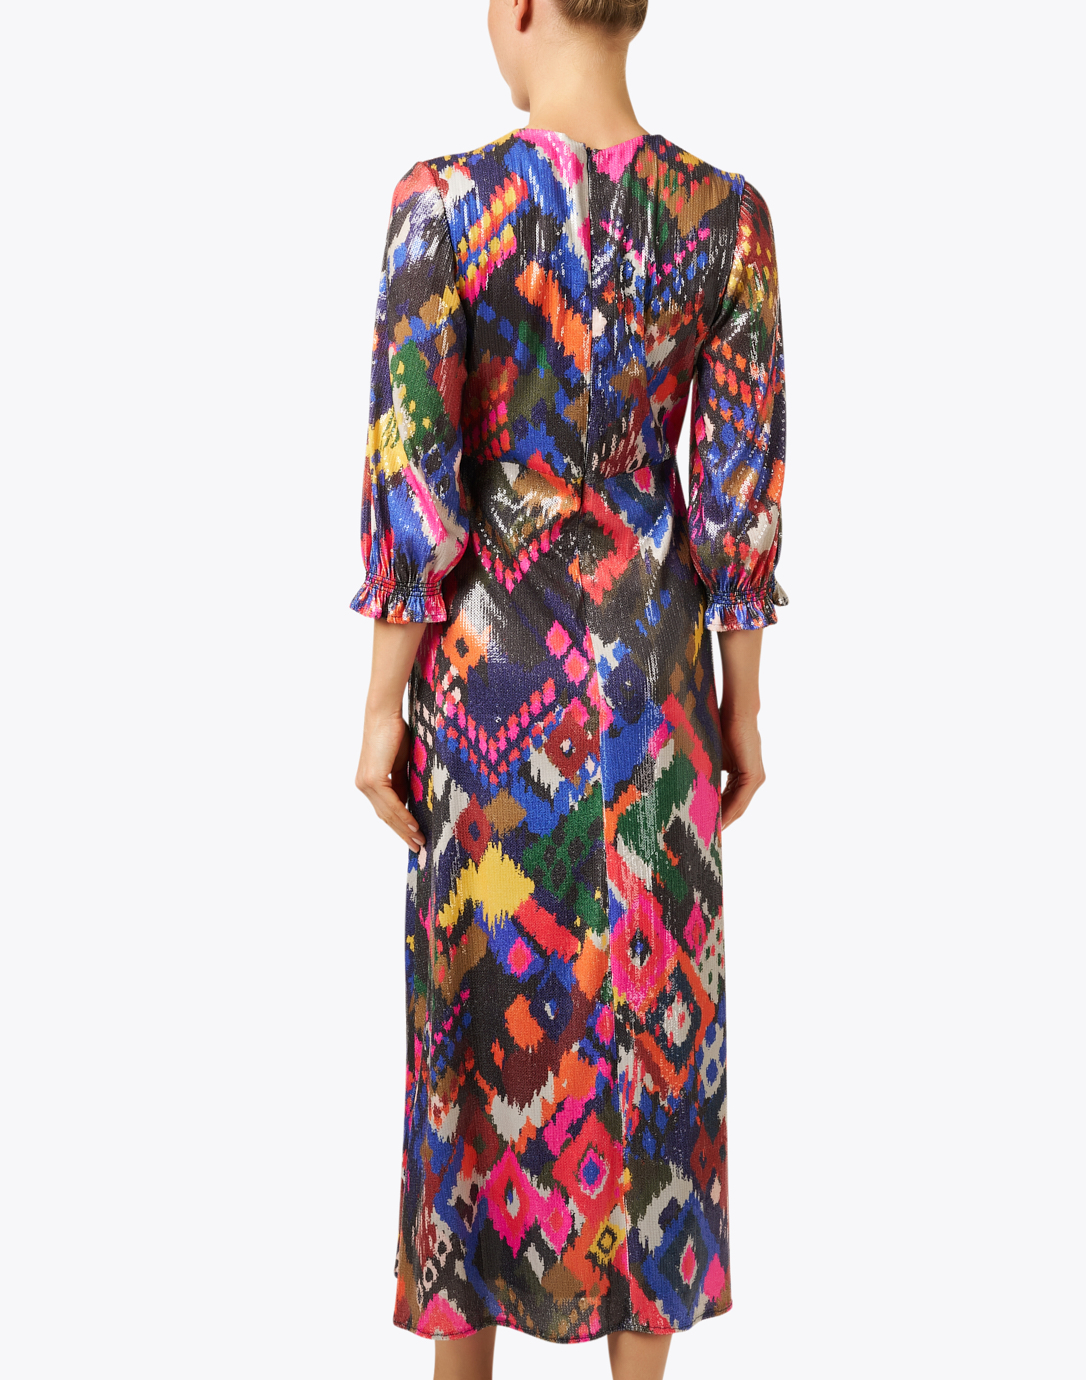 Kara Multi Ikat Sequin Print Dress | Vilagallo